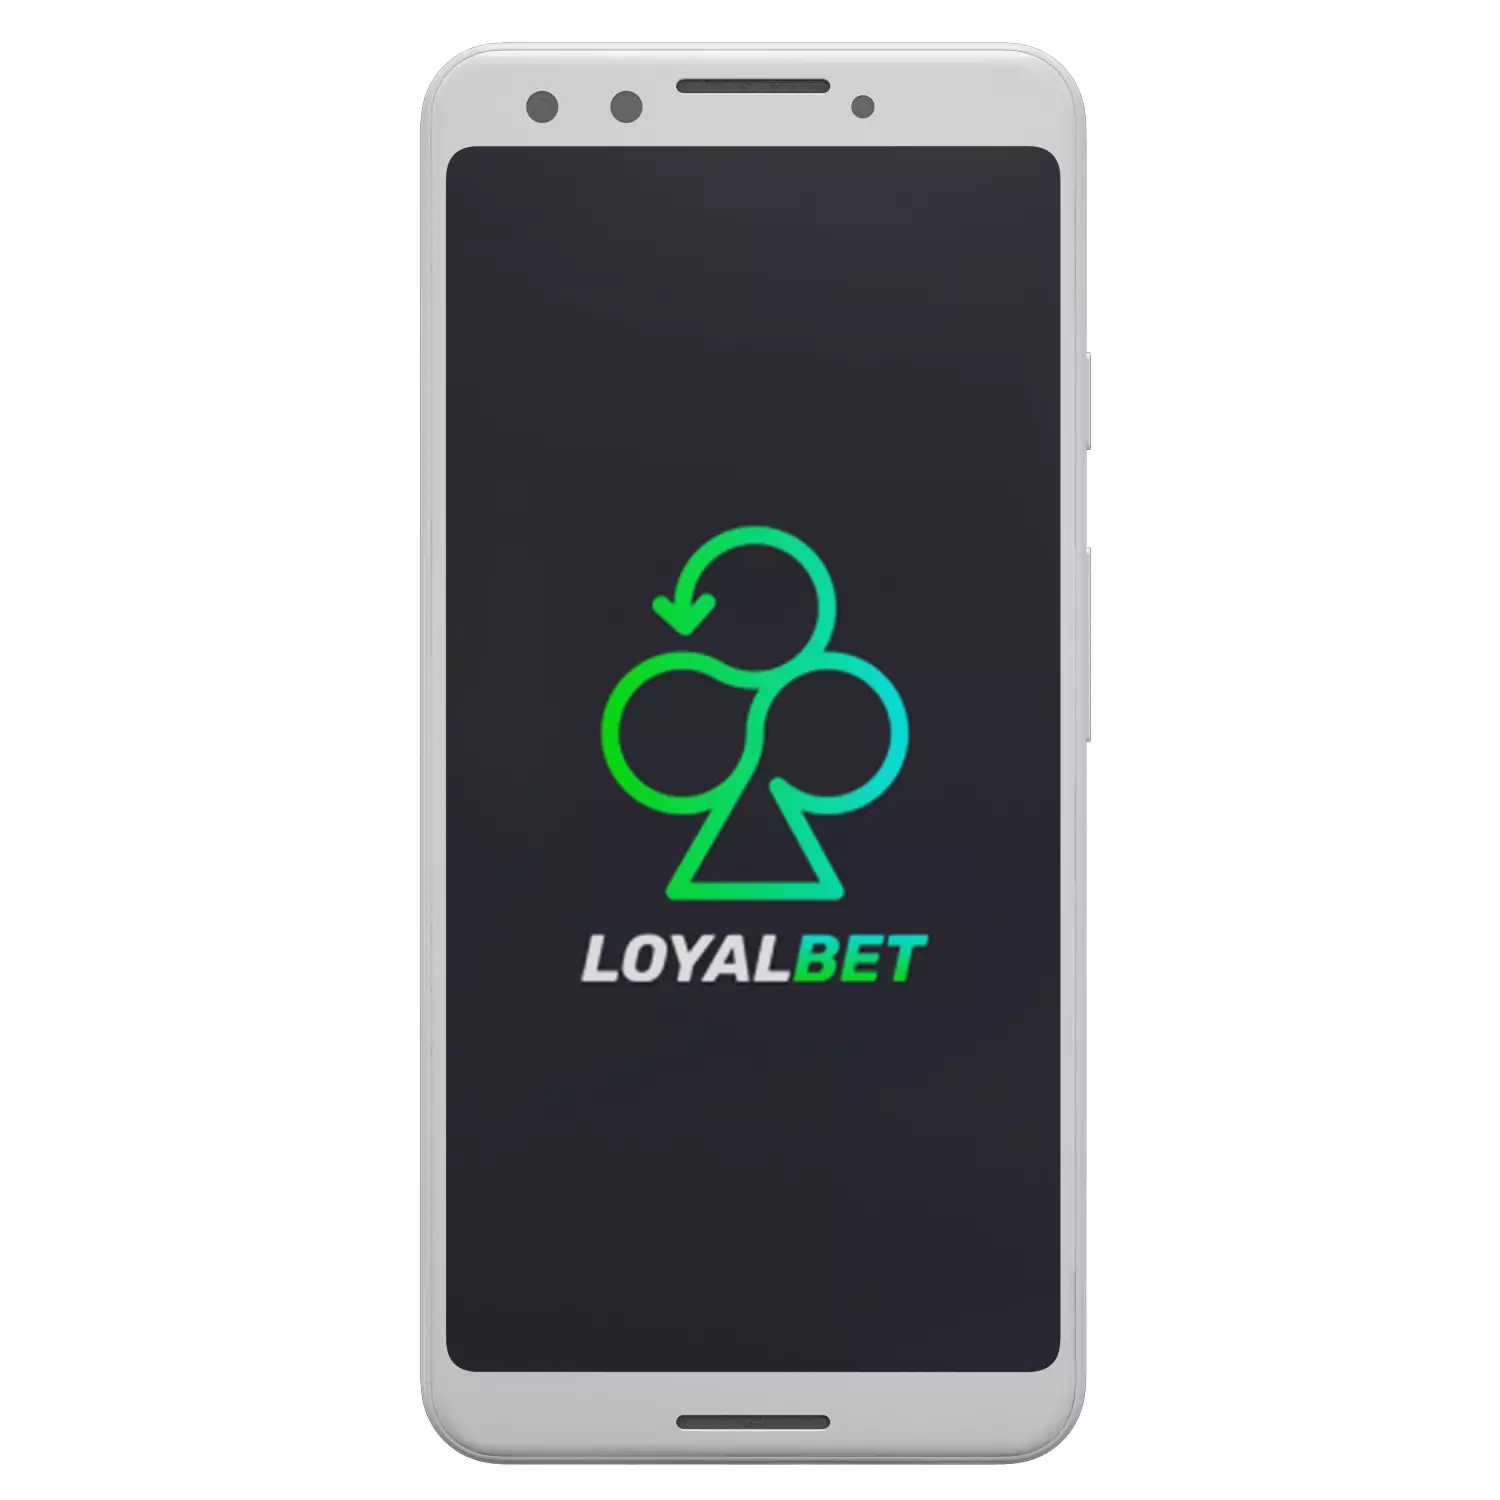 Loyalbet mobile app is still under development.